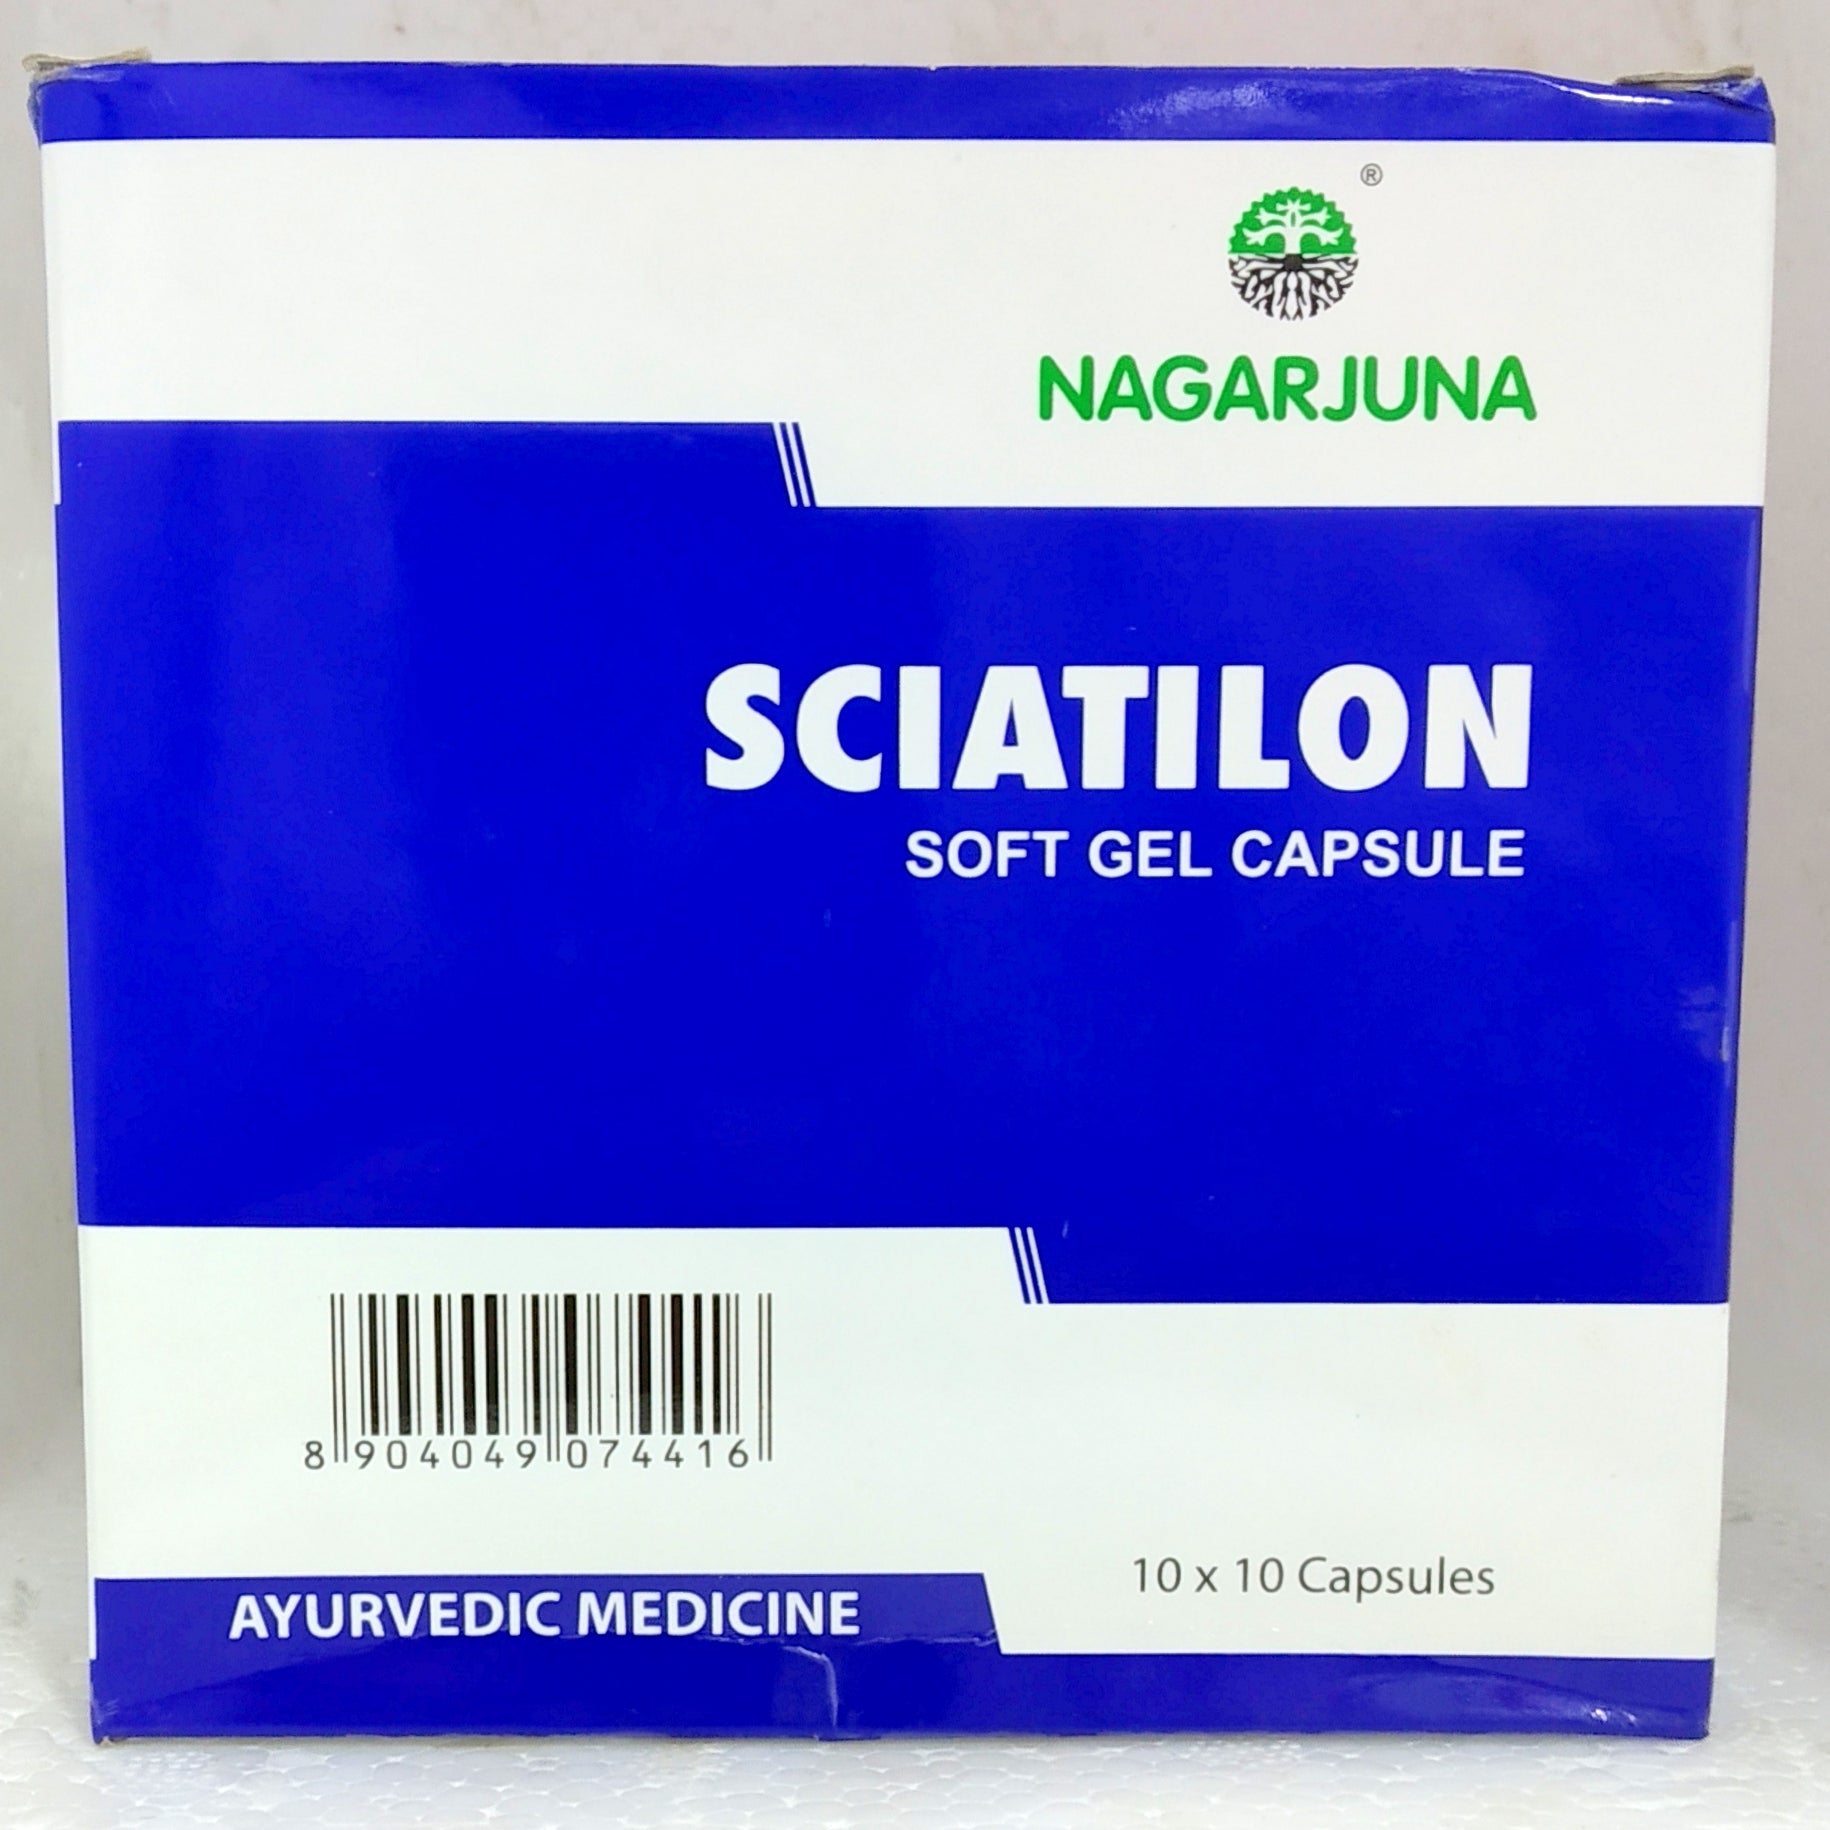 Shop Sciatilon 10Capsules at price 65.00 from Nagarjuna Online - Ayush Care